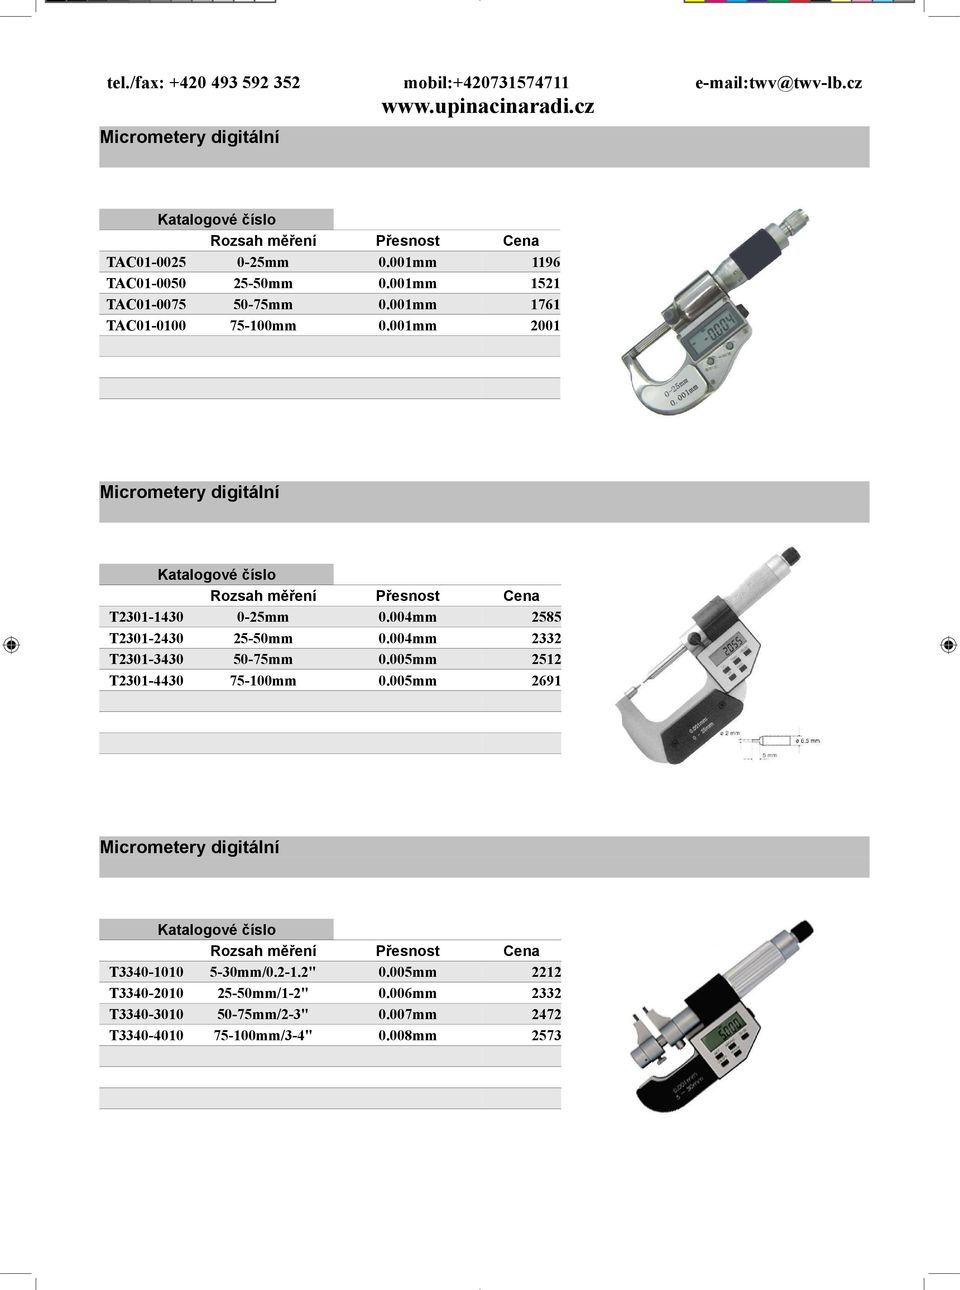 004mm 2332 T2301-3430 50-75mm 0.005mm 2512 T2301-4430 75-100mm 0.005mm 2691 Micrometery digitální T3340-1010 5-30mm/0.